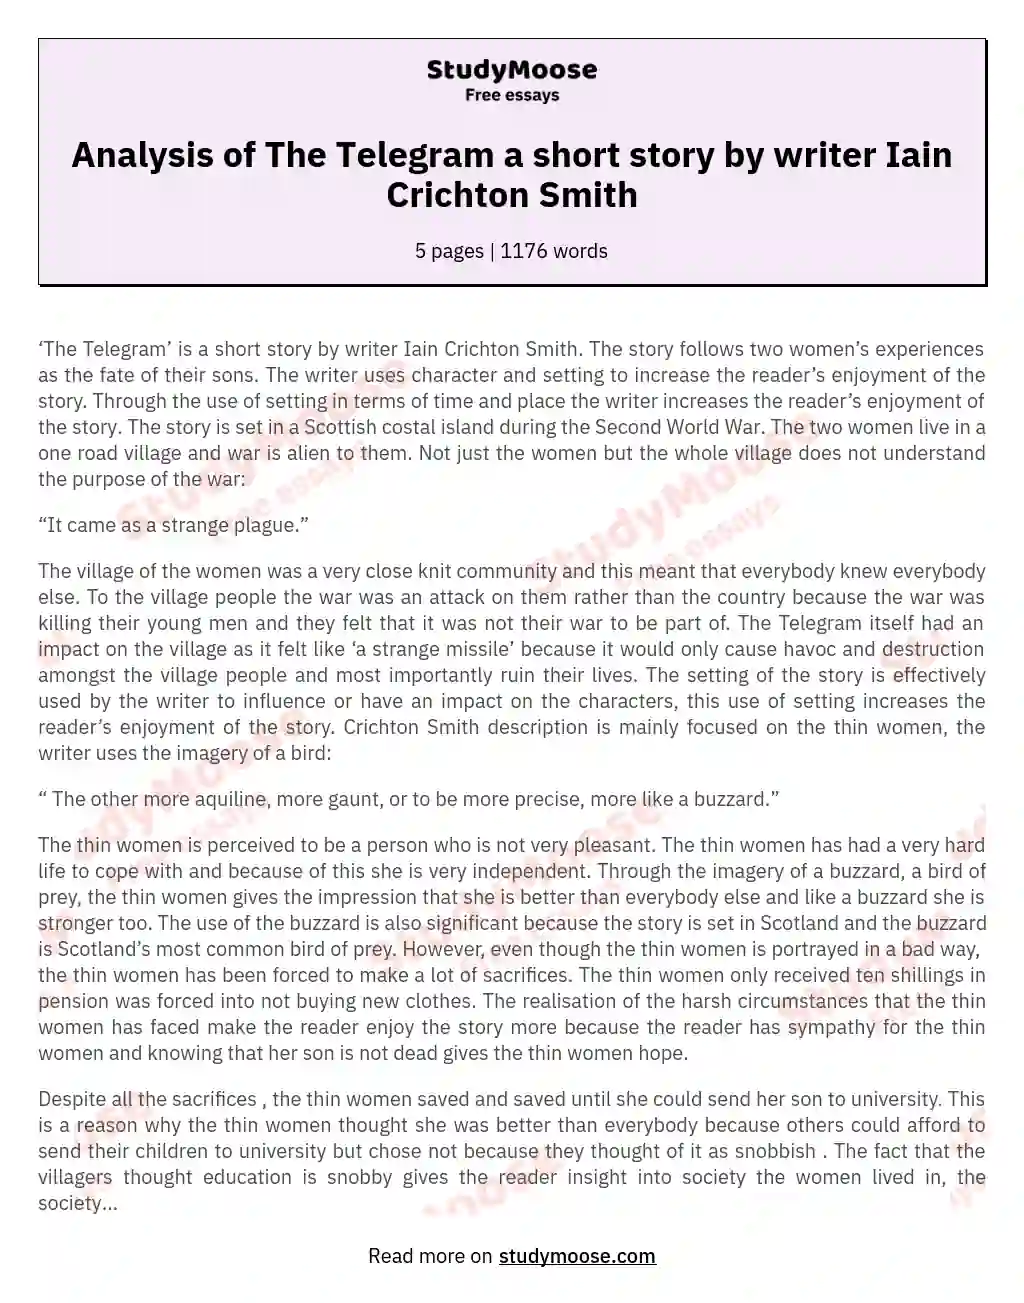 Analysis of The Telegram a short story by writer Iain Crichton Smith essay